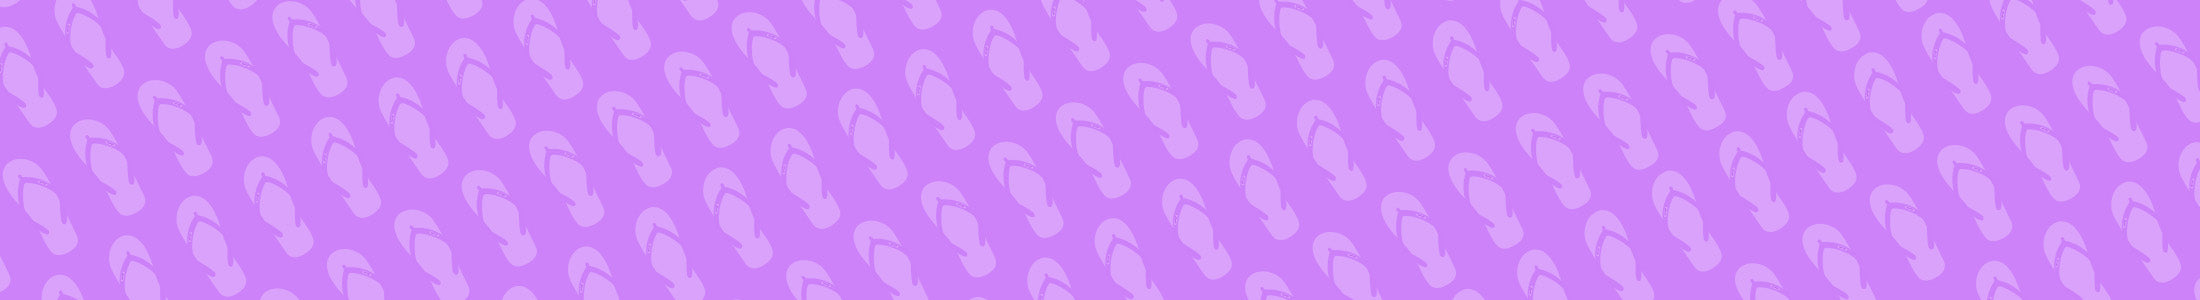 bg purple slippers